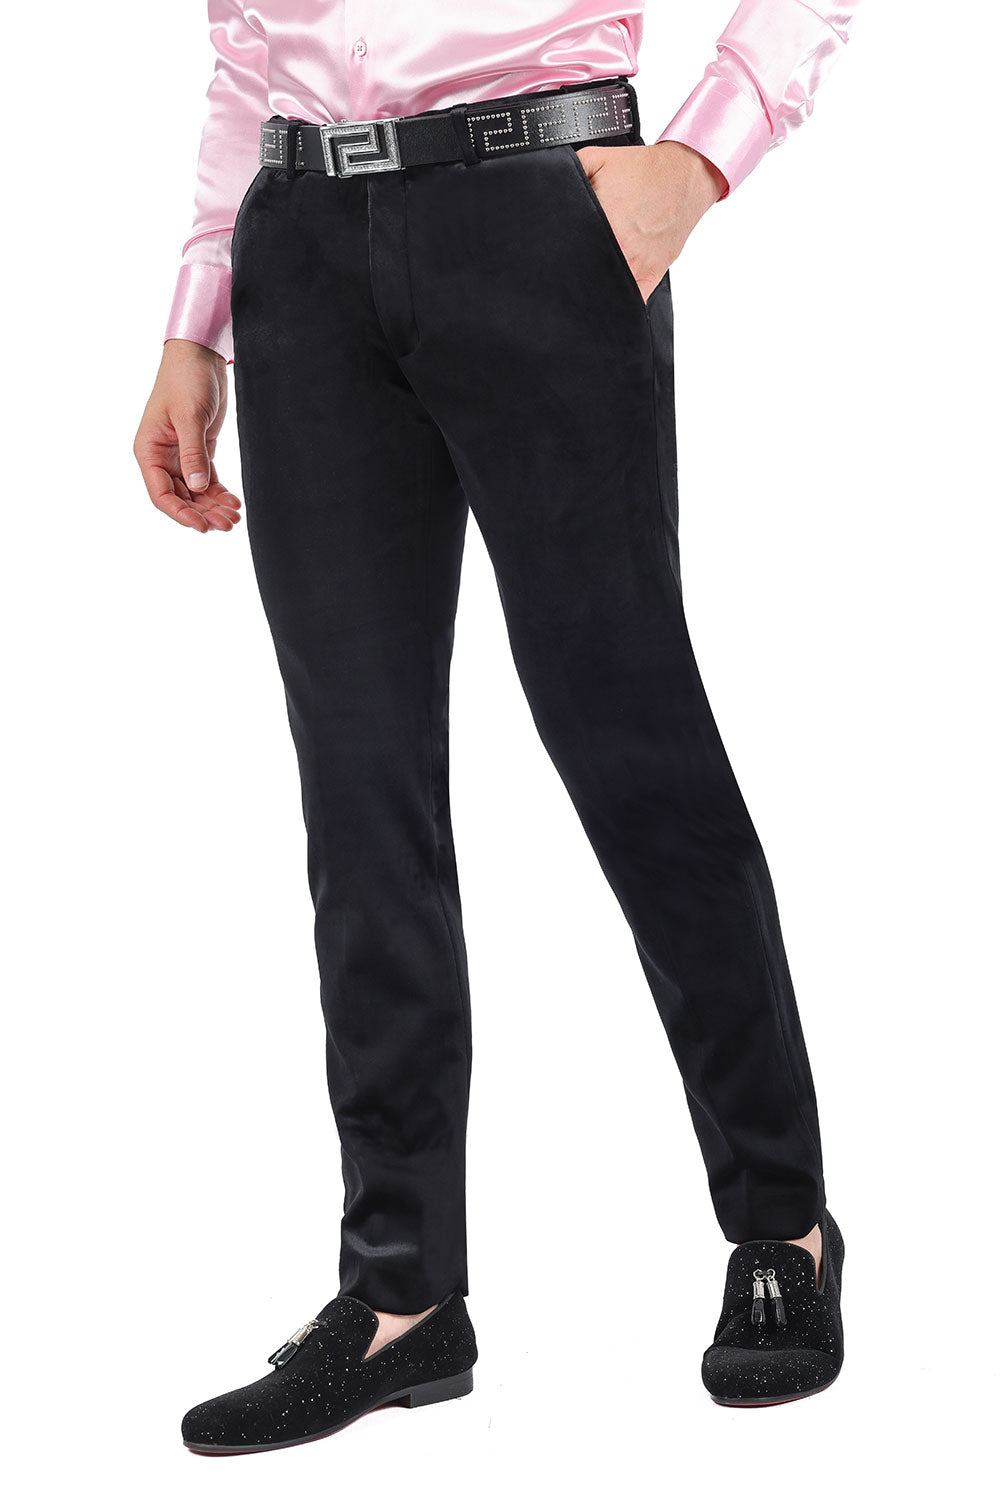 Barabas Men's Velvet Shiny Chino Solid Color Dress Pants 3CP04 Black